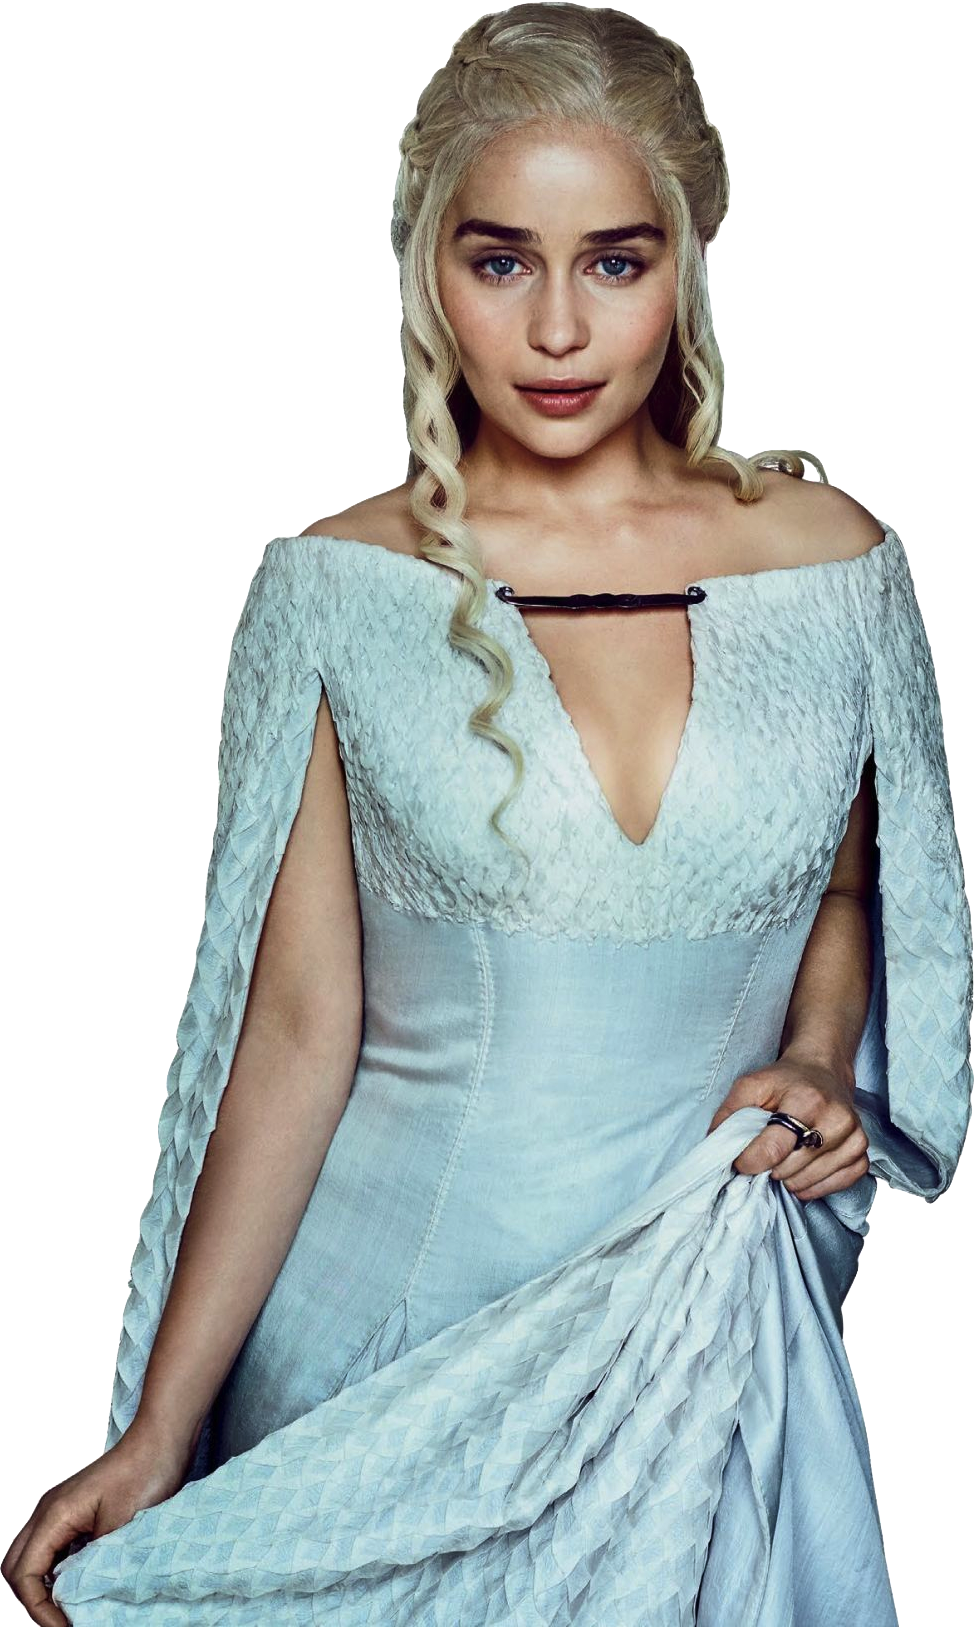 Daenerys Emilia Clarke PNG HD Quality